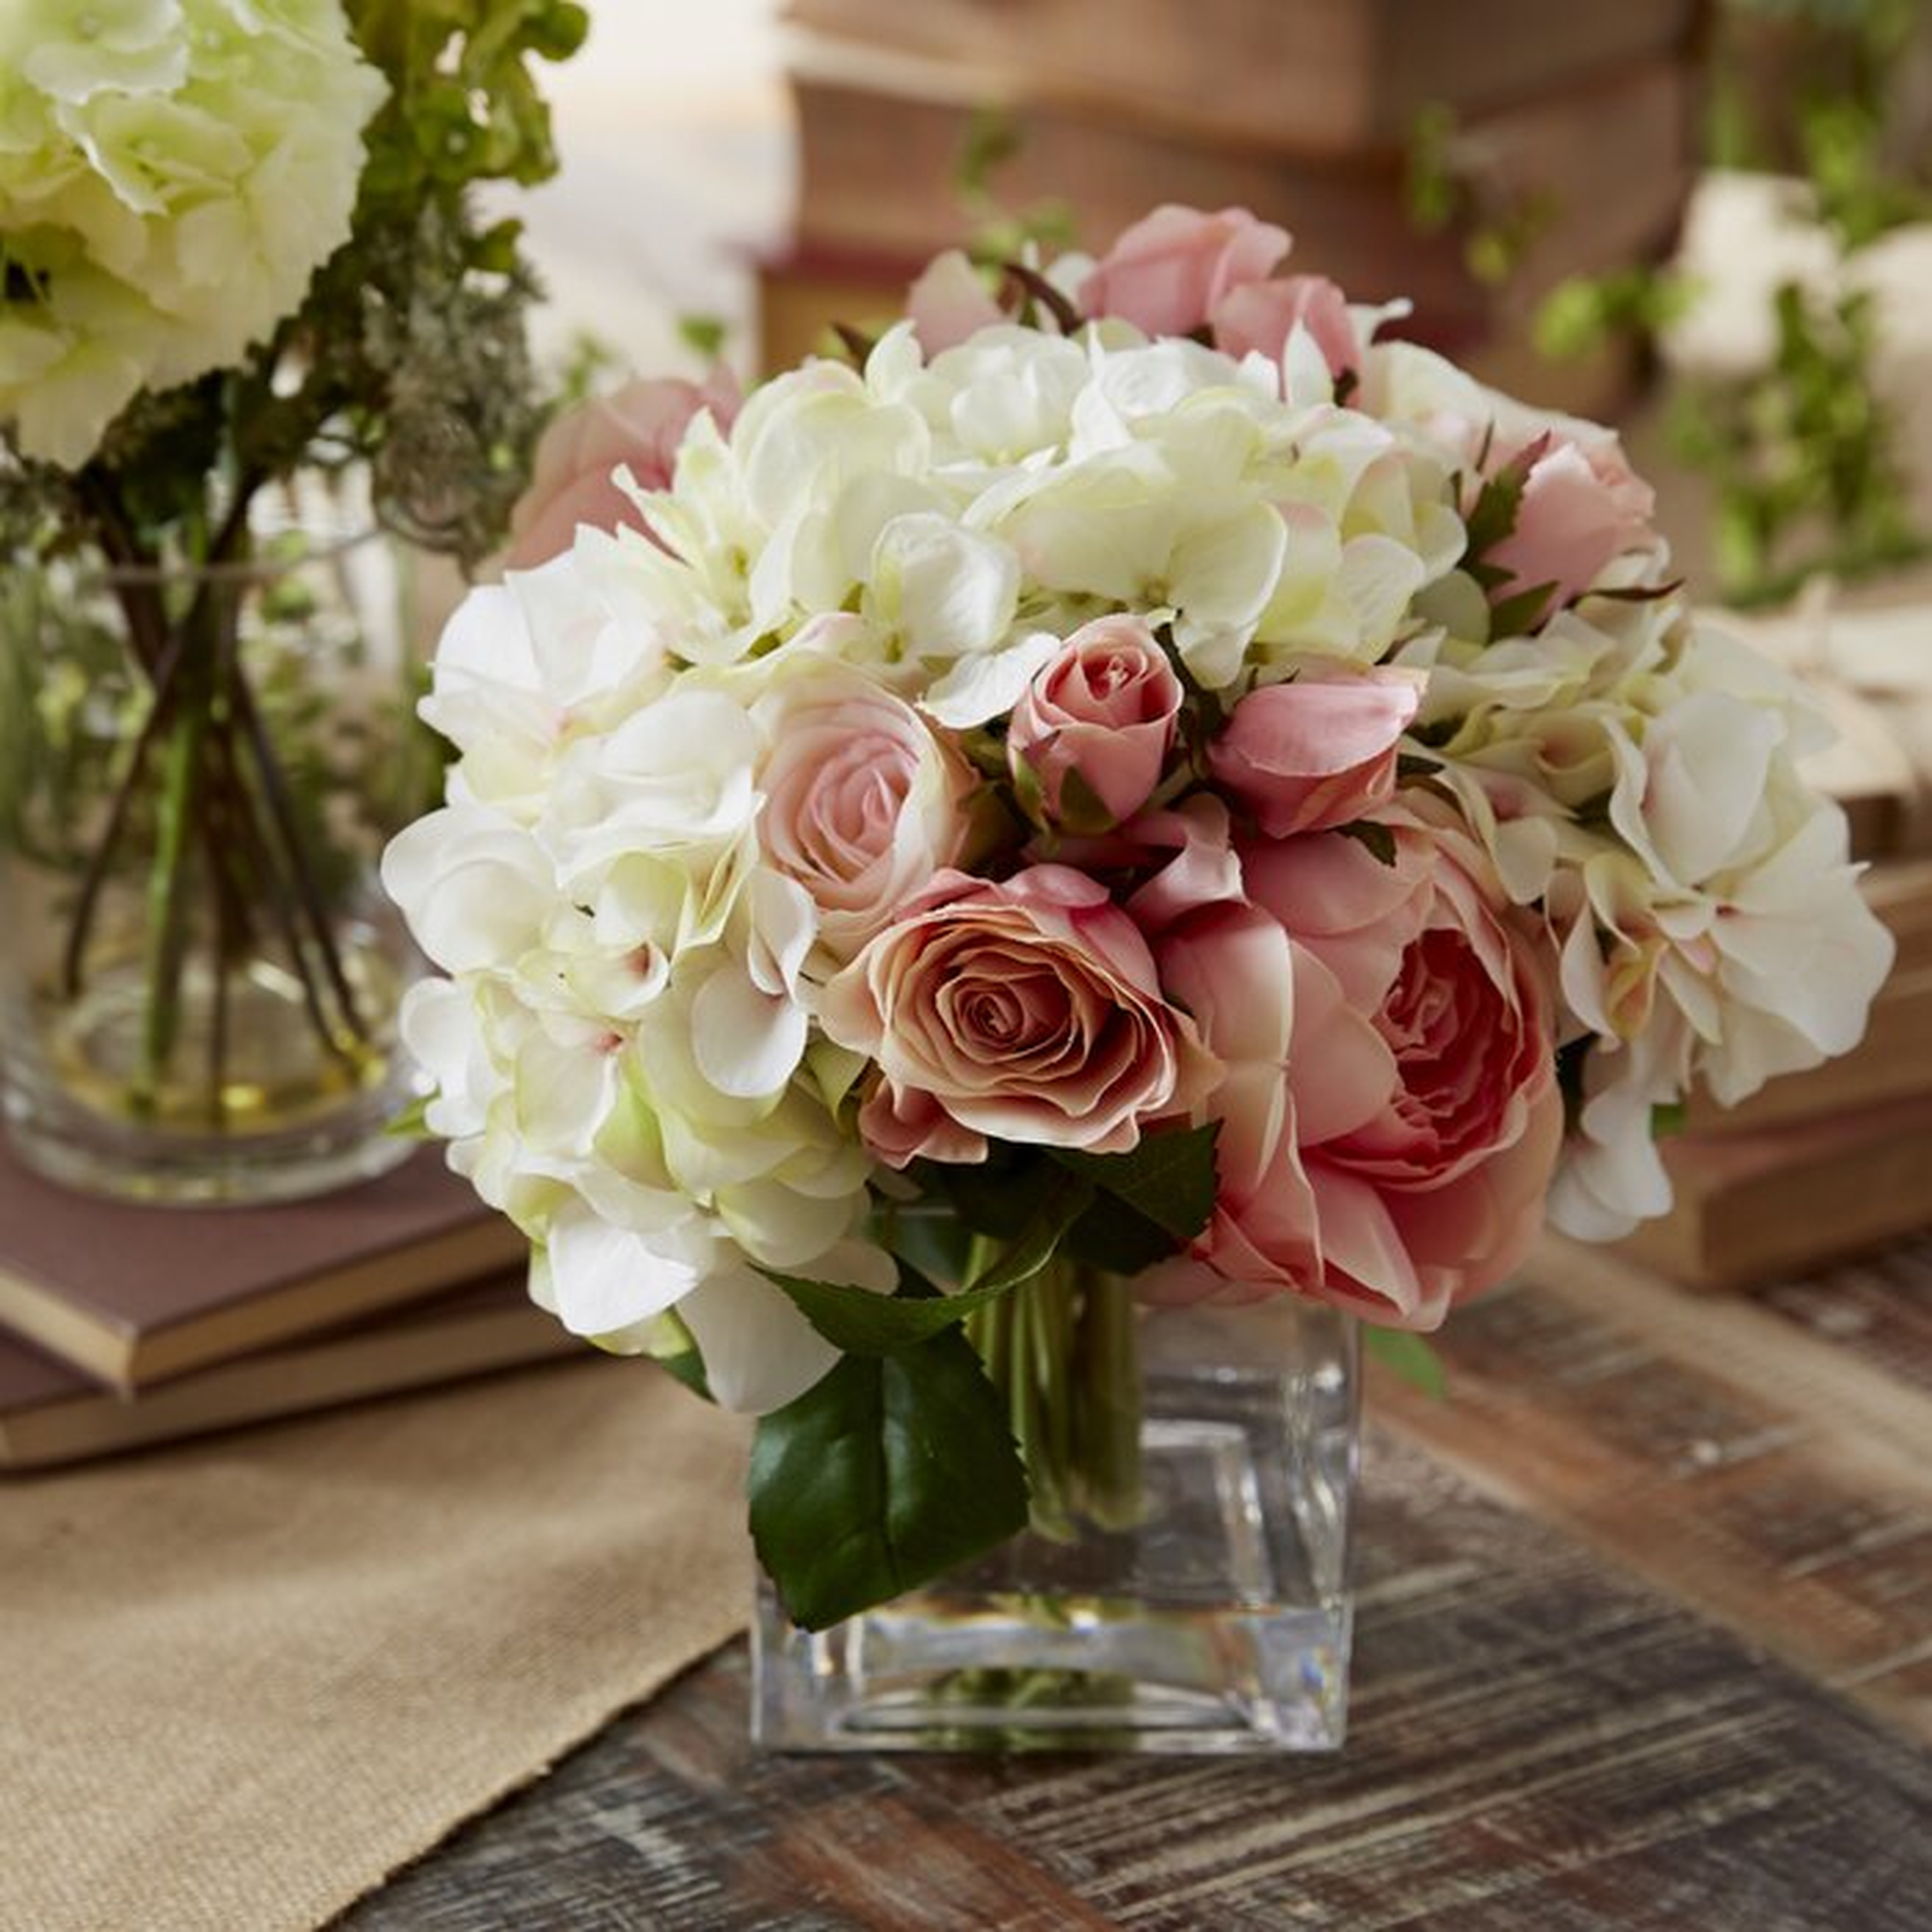 Assorted Roses Centerpiece in Glass Vase - Wayfair